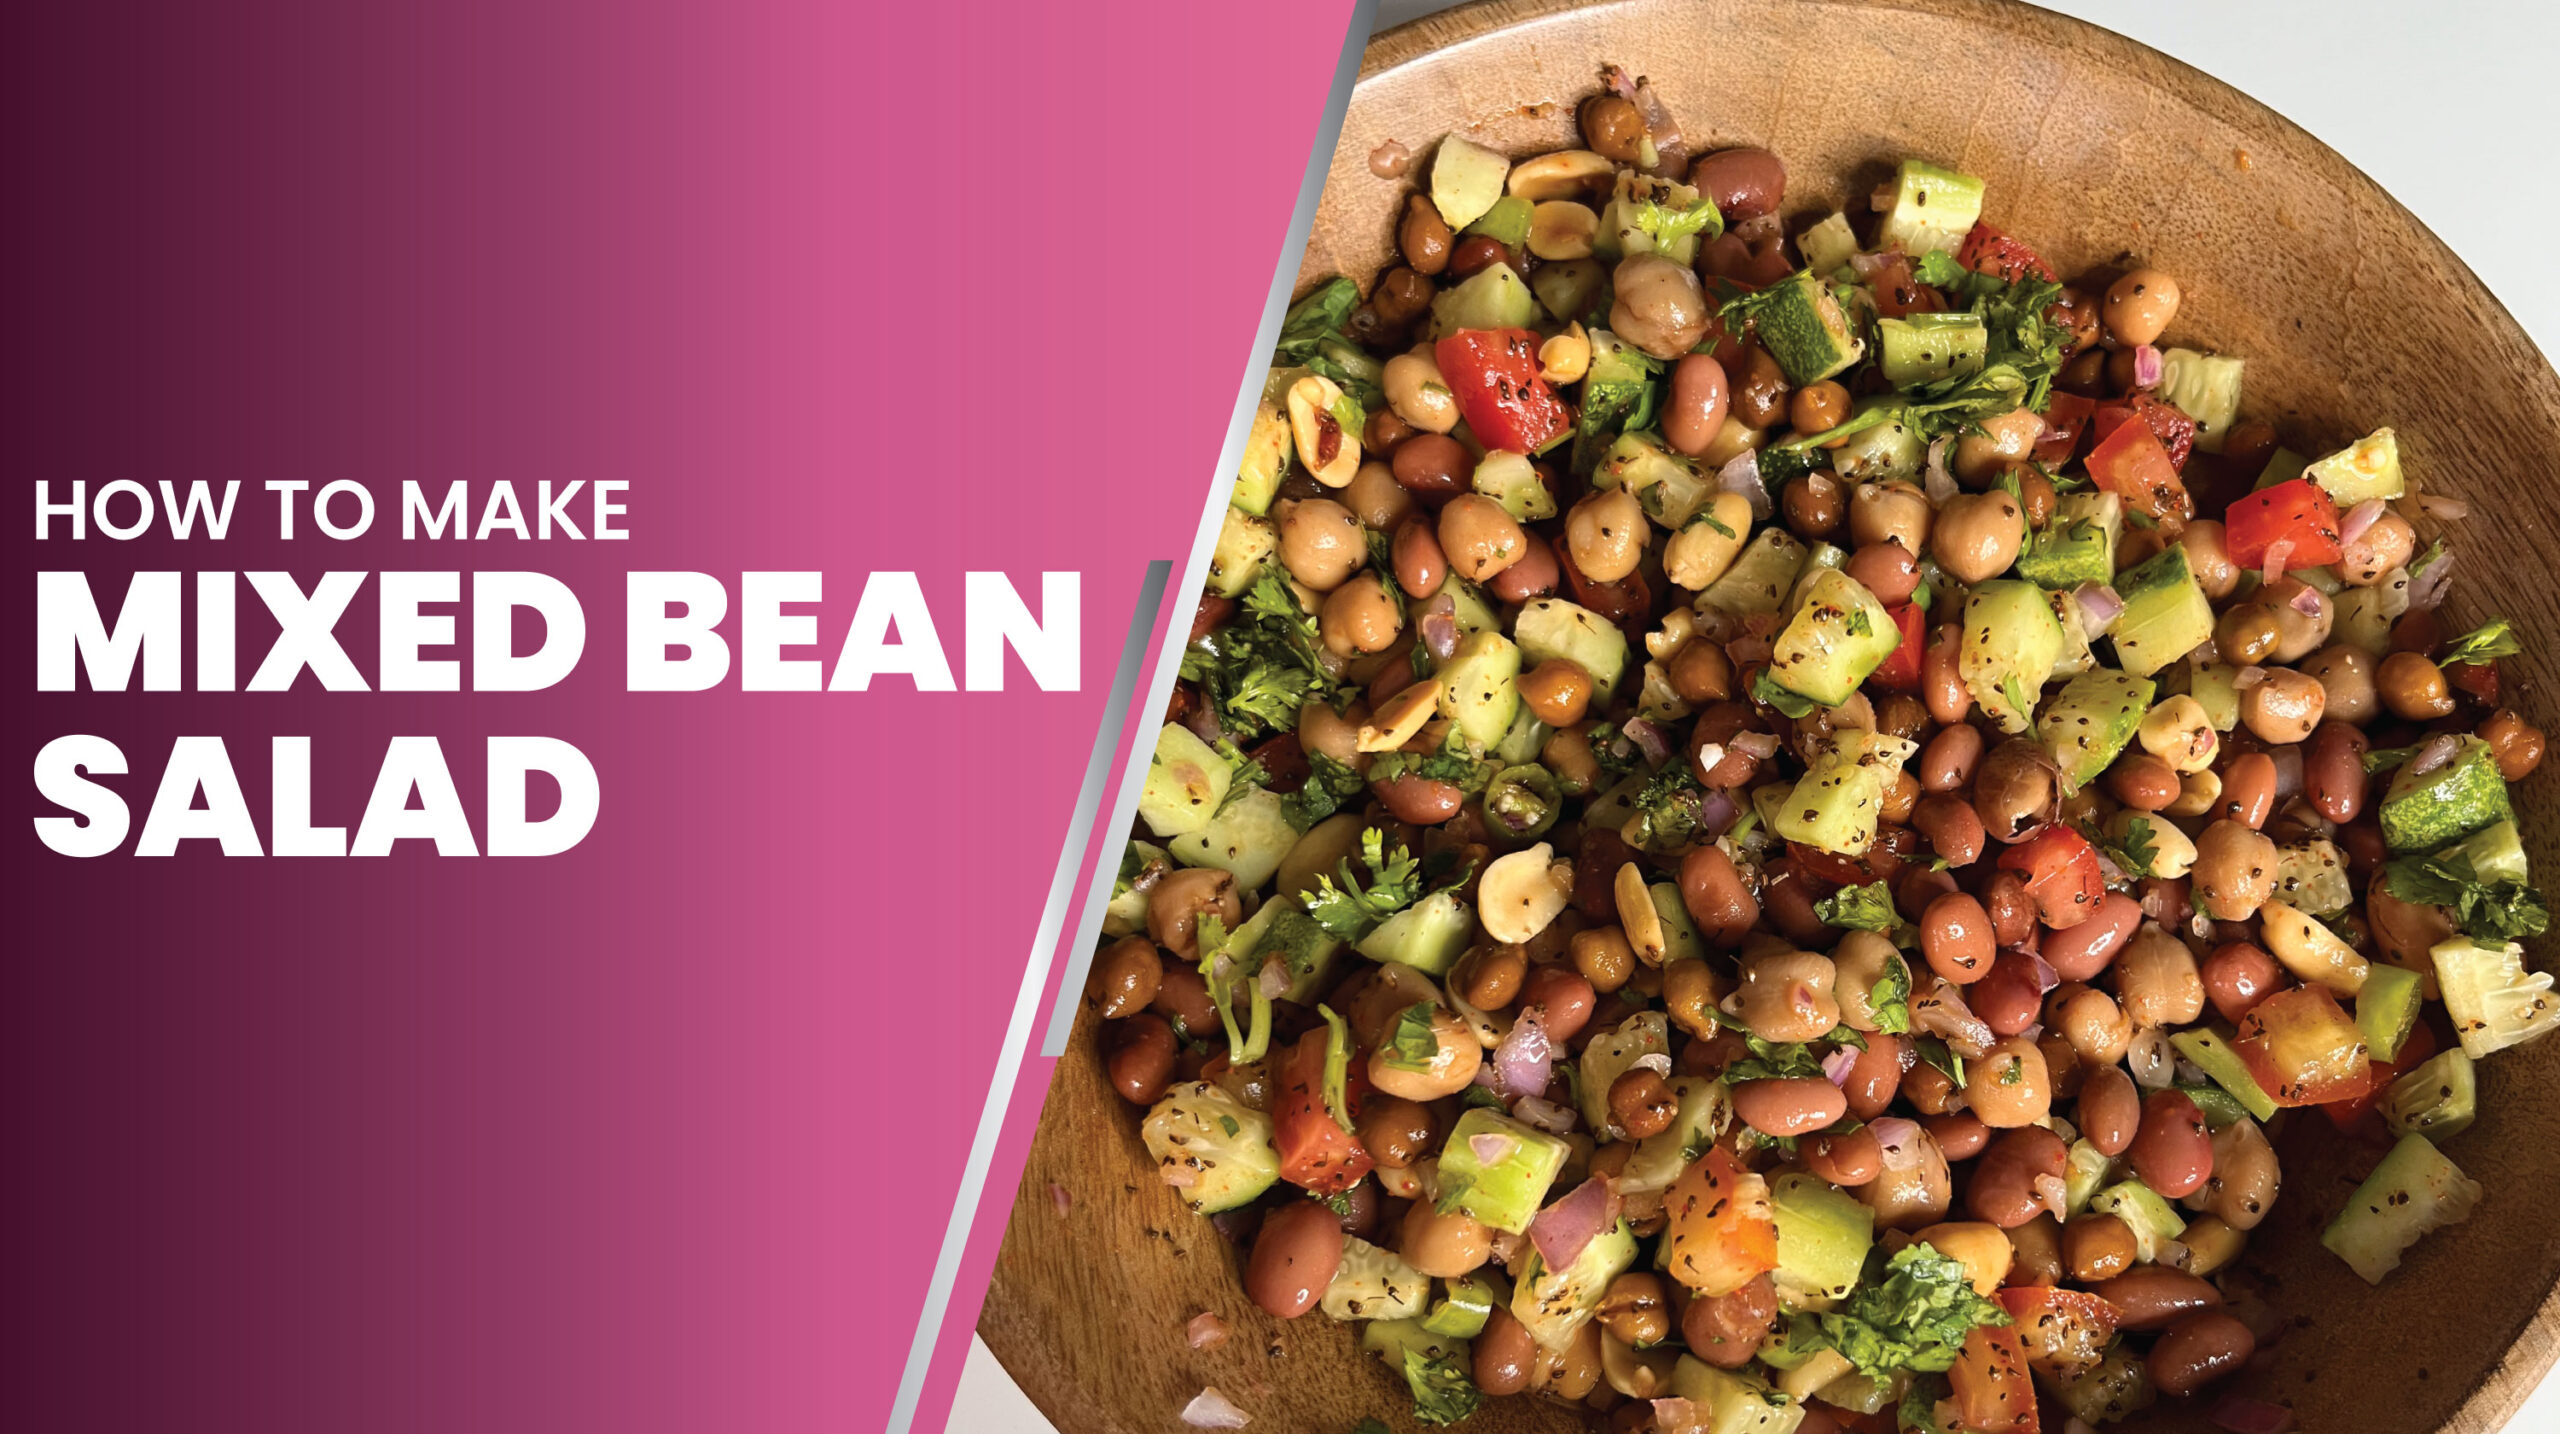 11how to make mixed bean salad recipe